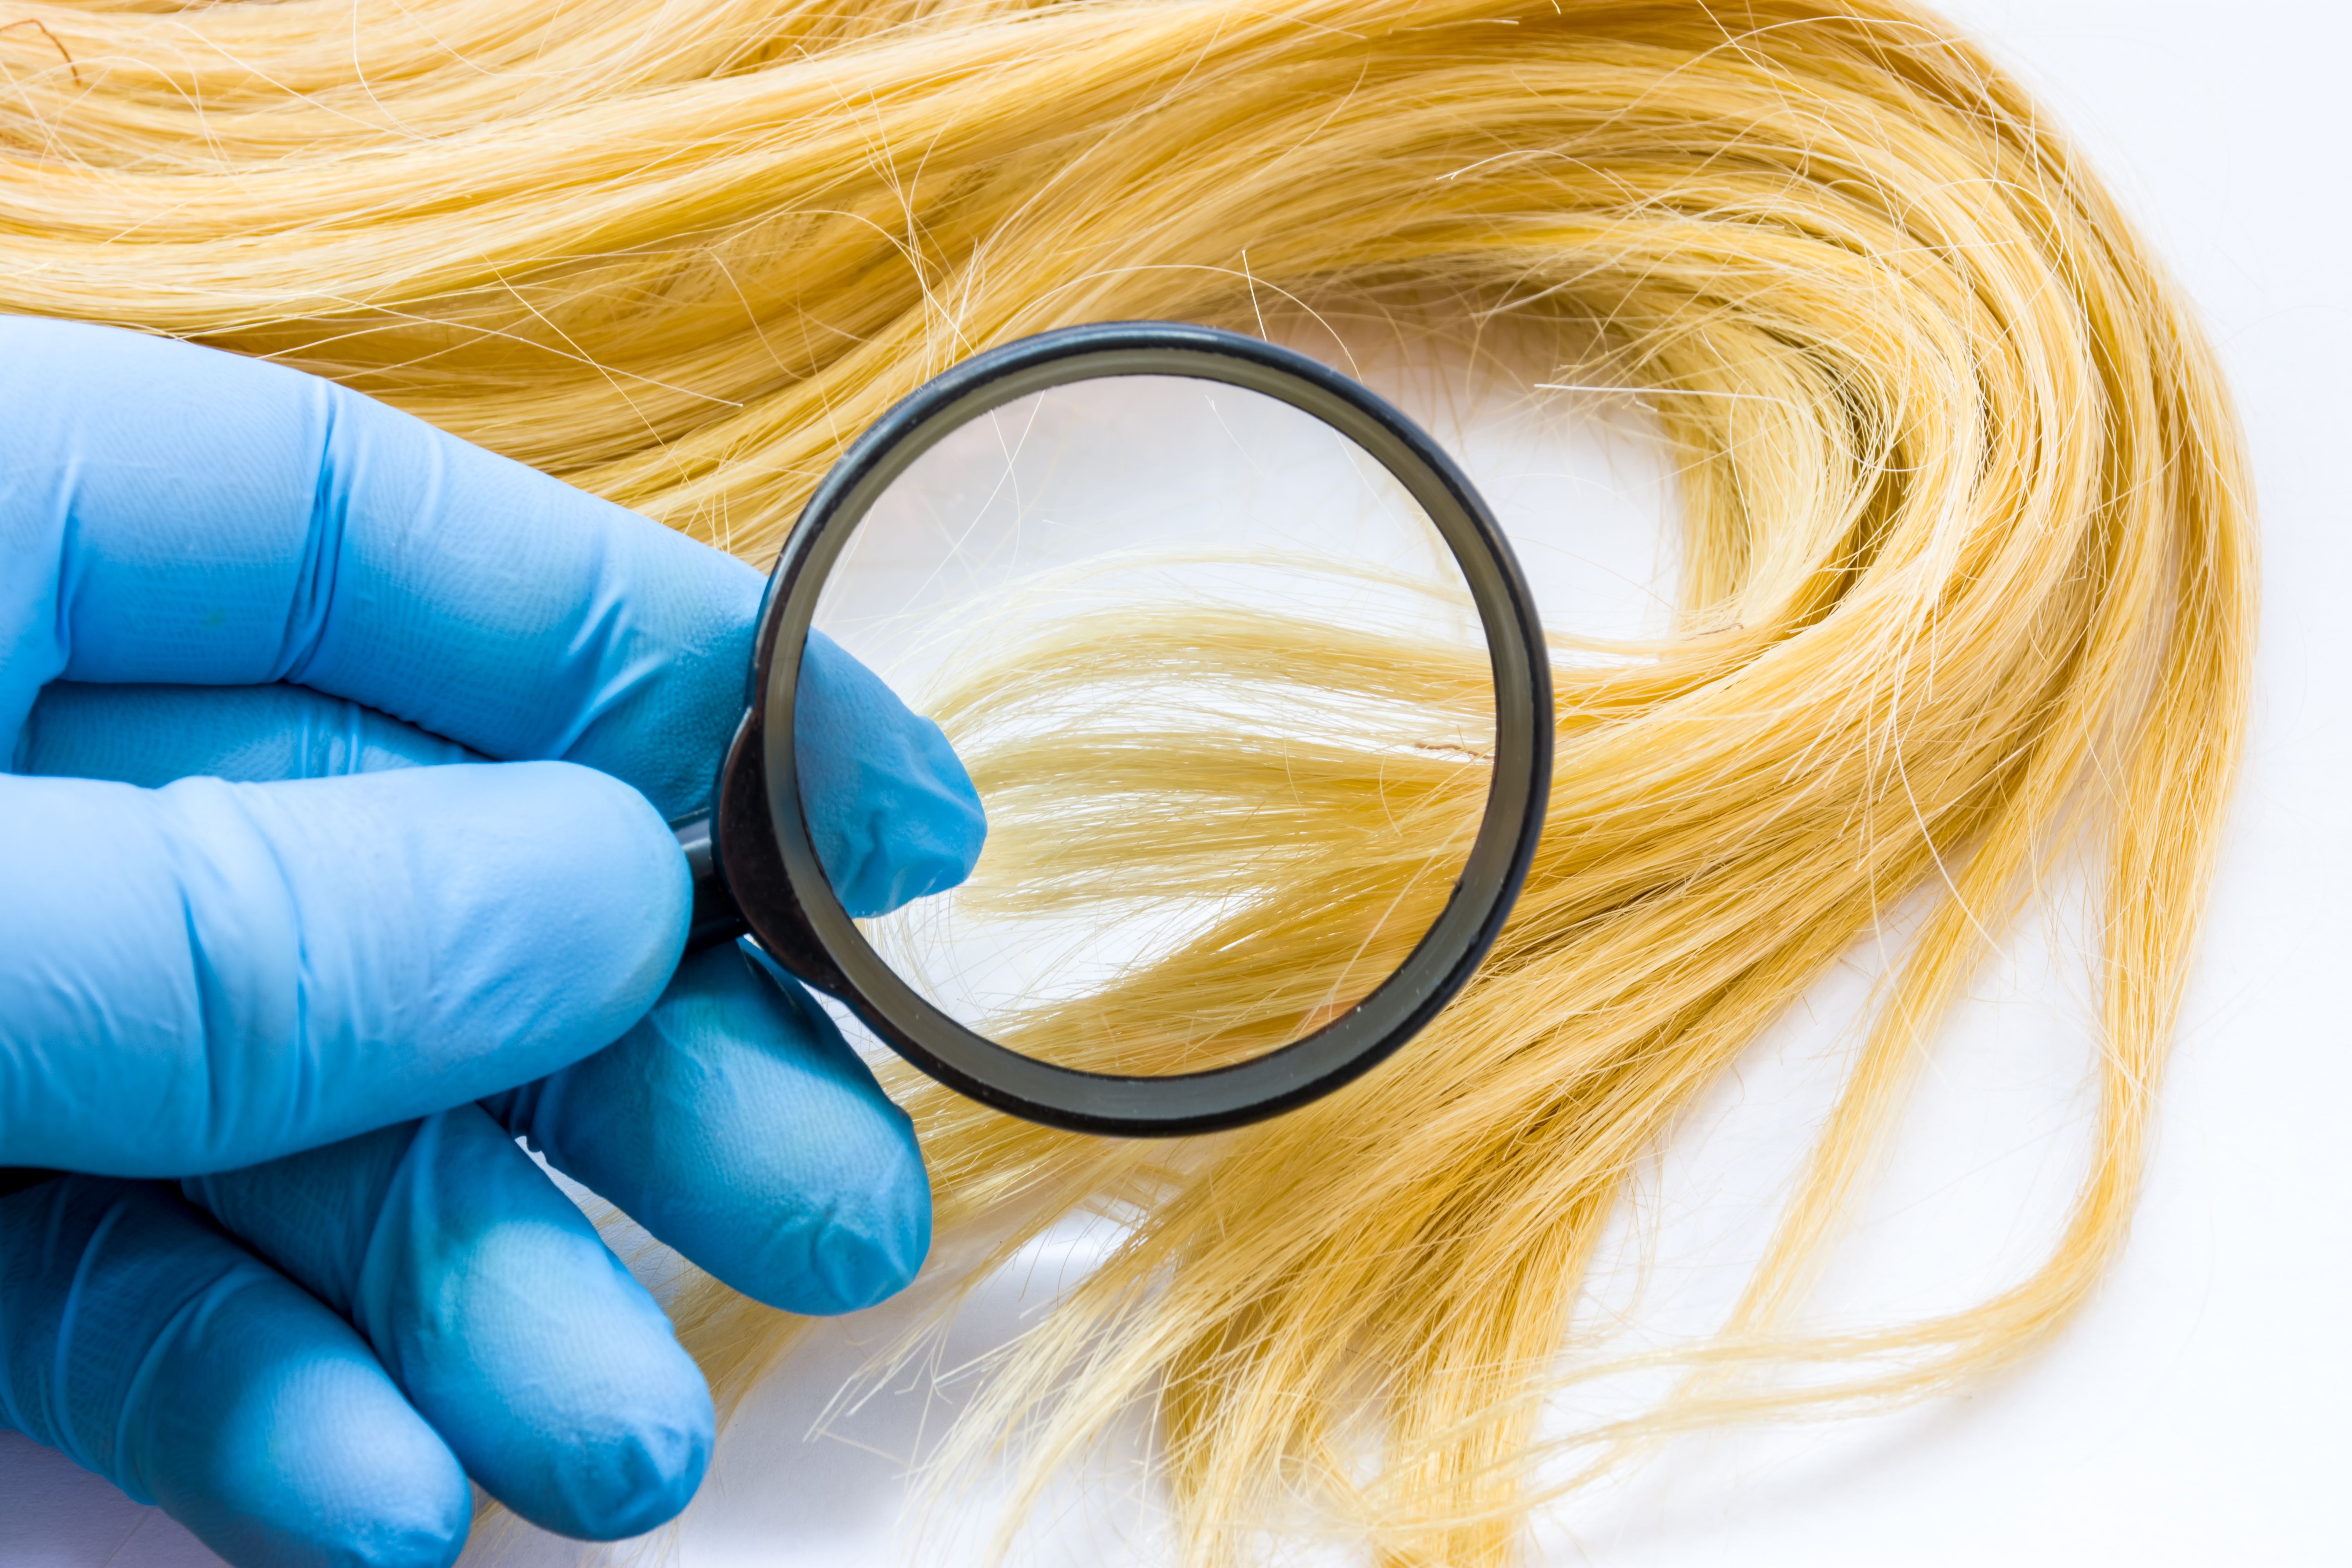 Dermatologist examines hair breakage | Image Credit: shidlovski - stock.adobe.com